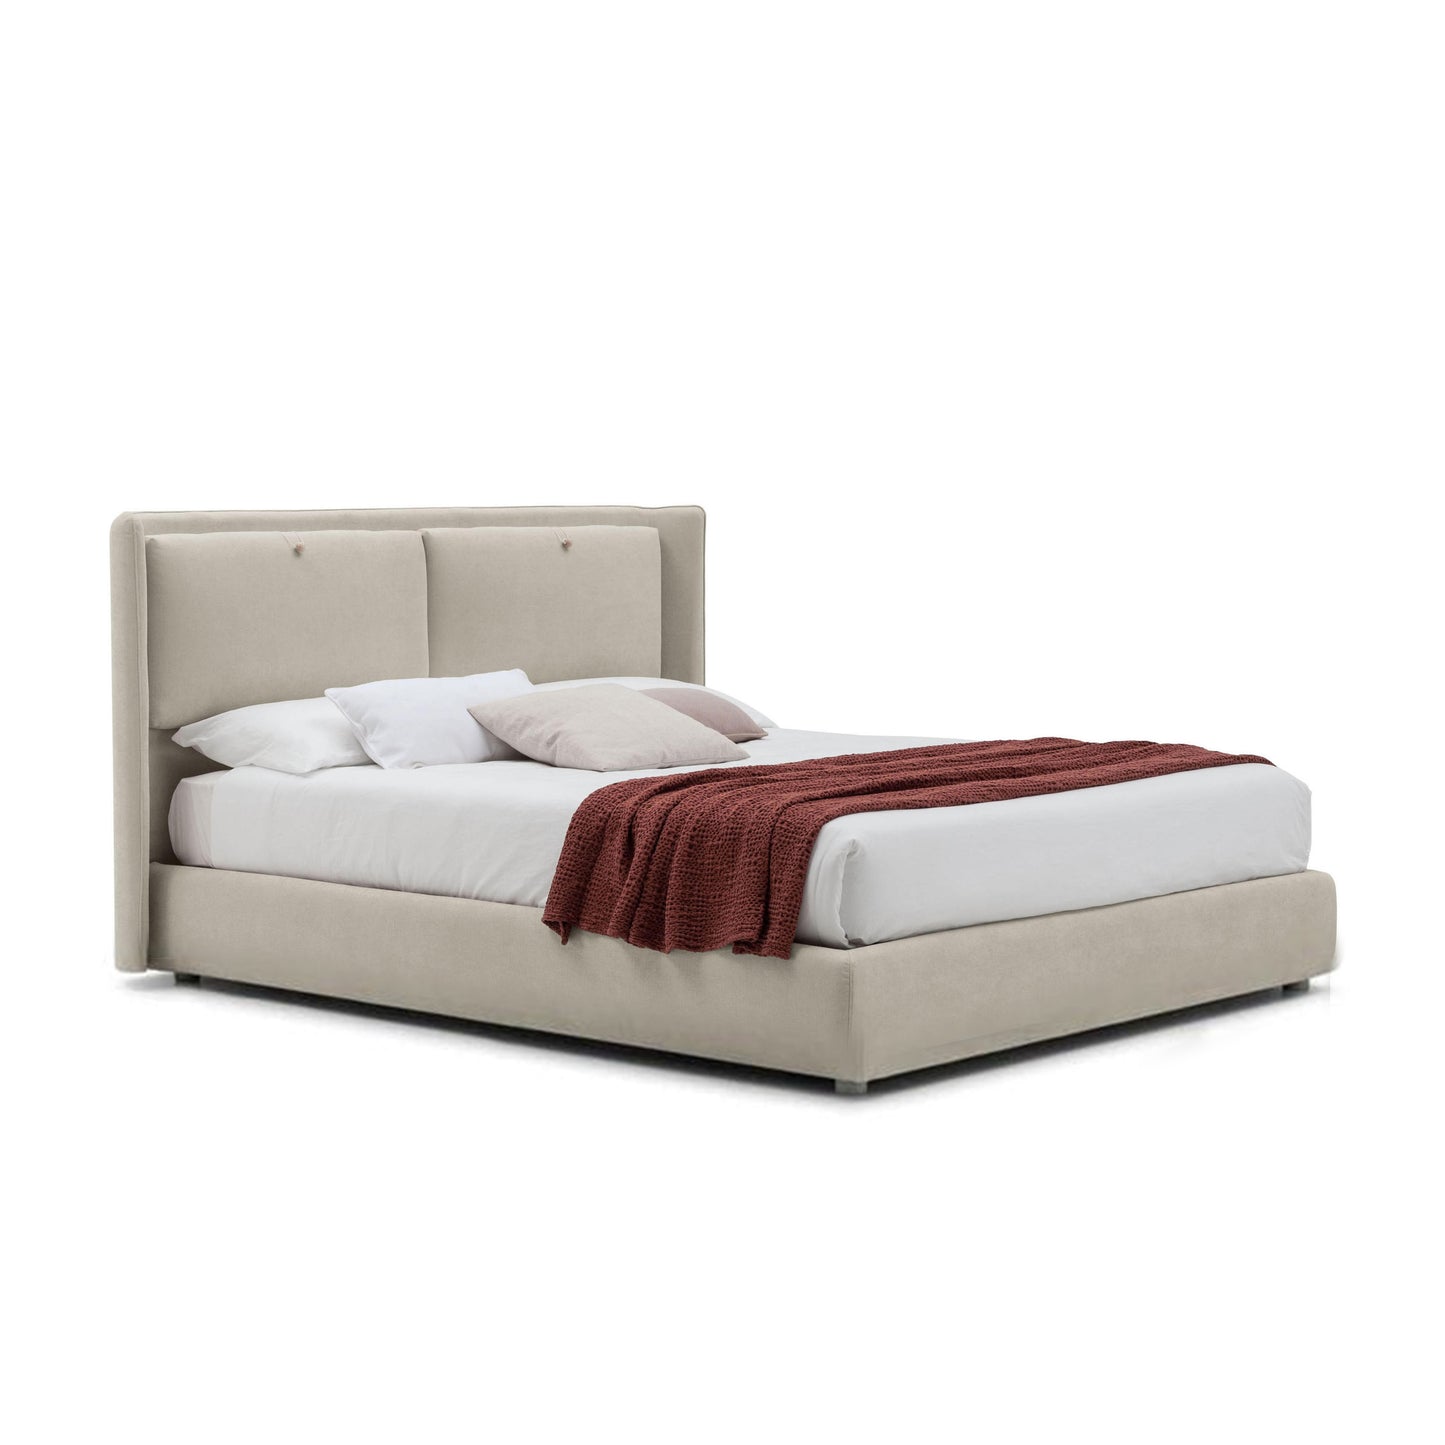 Bed - multiple sizes - TEM137